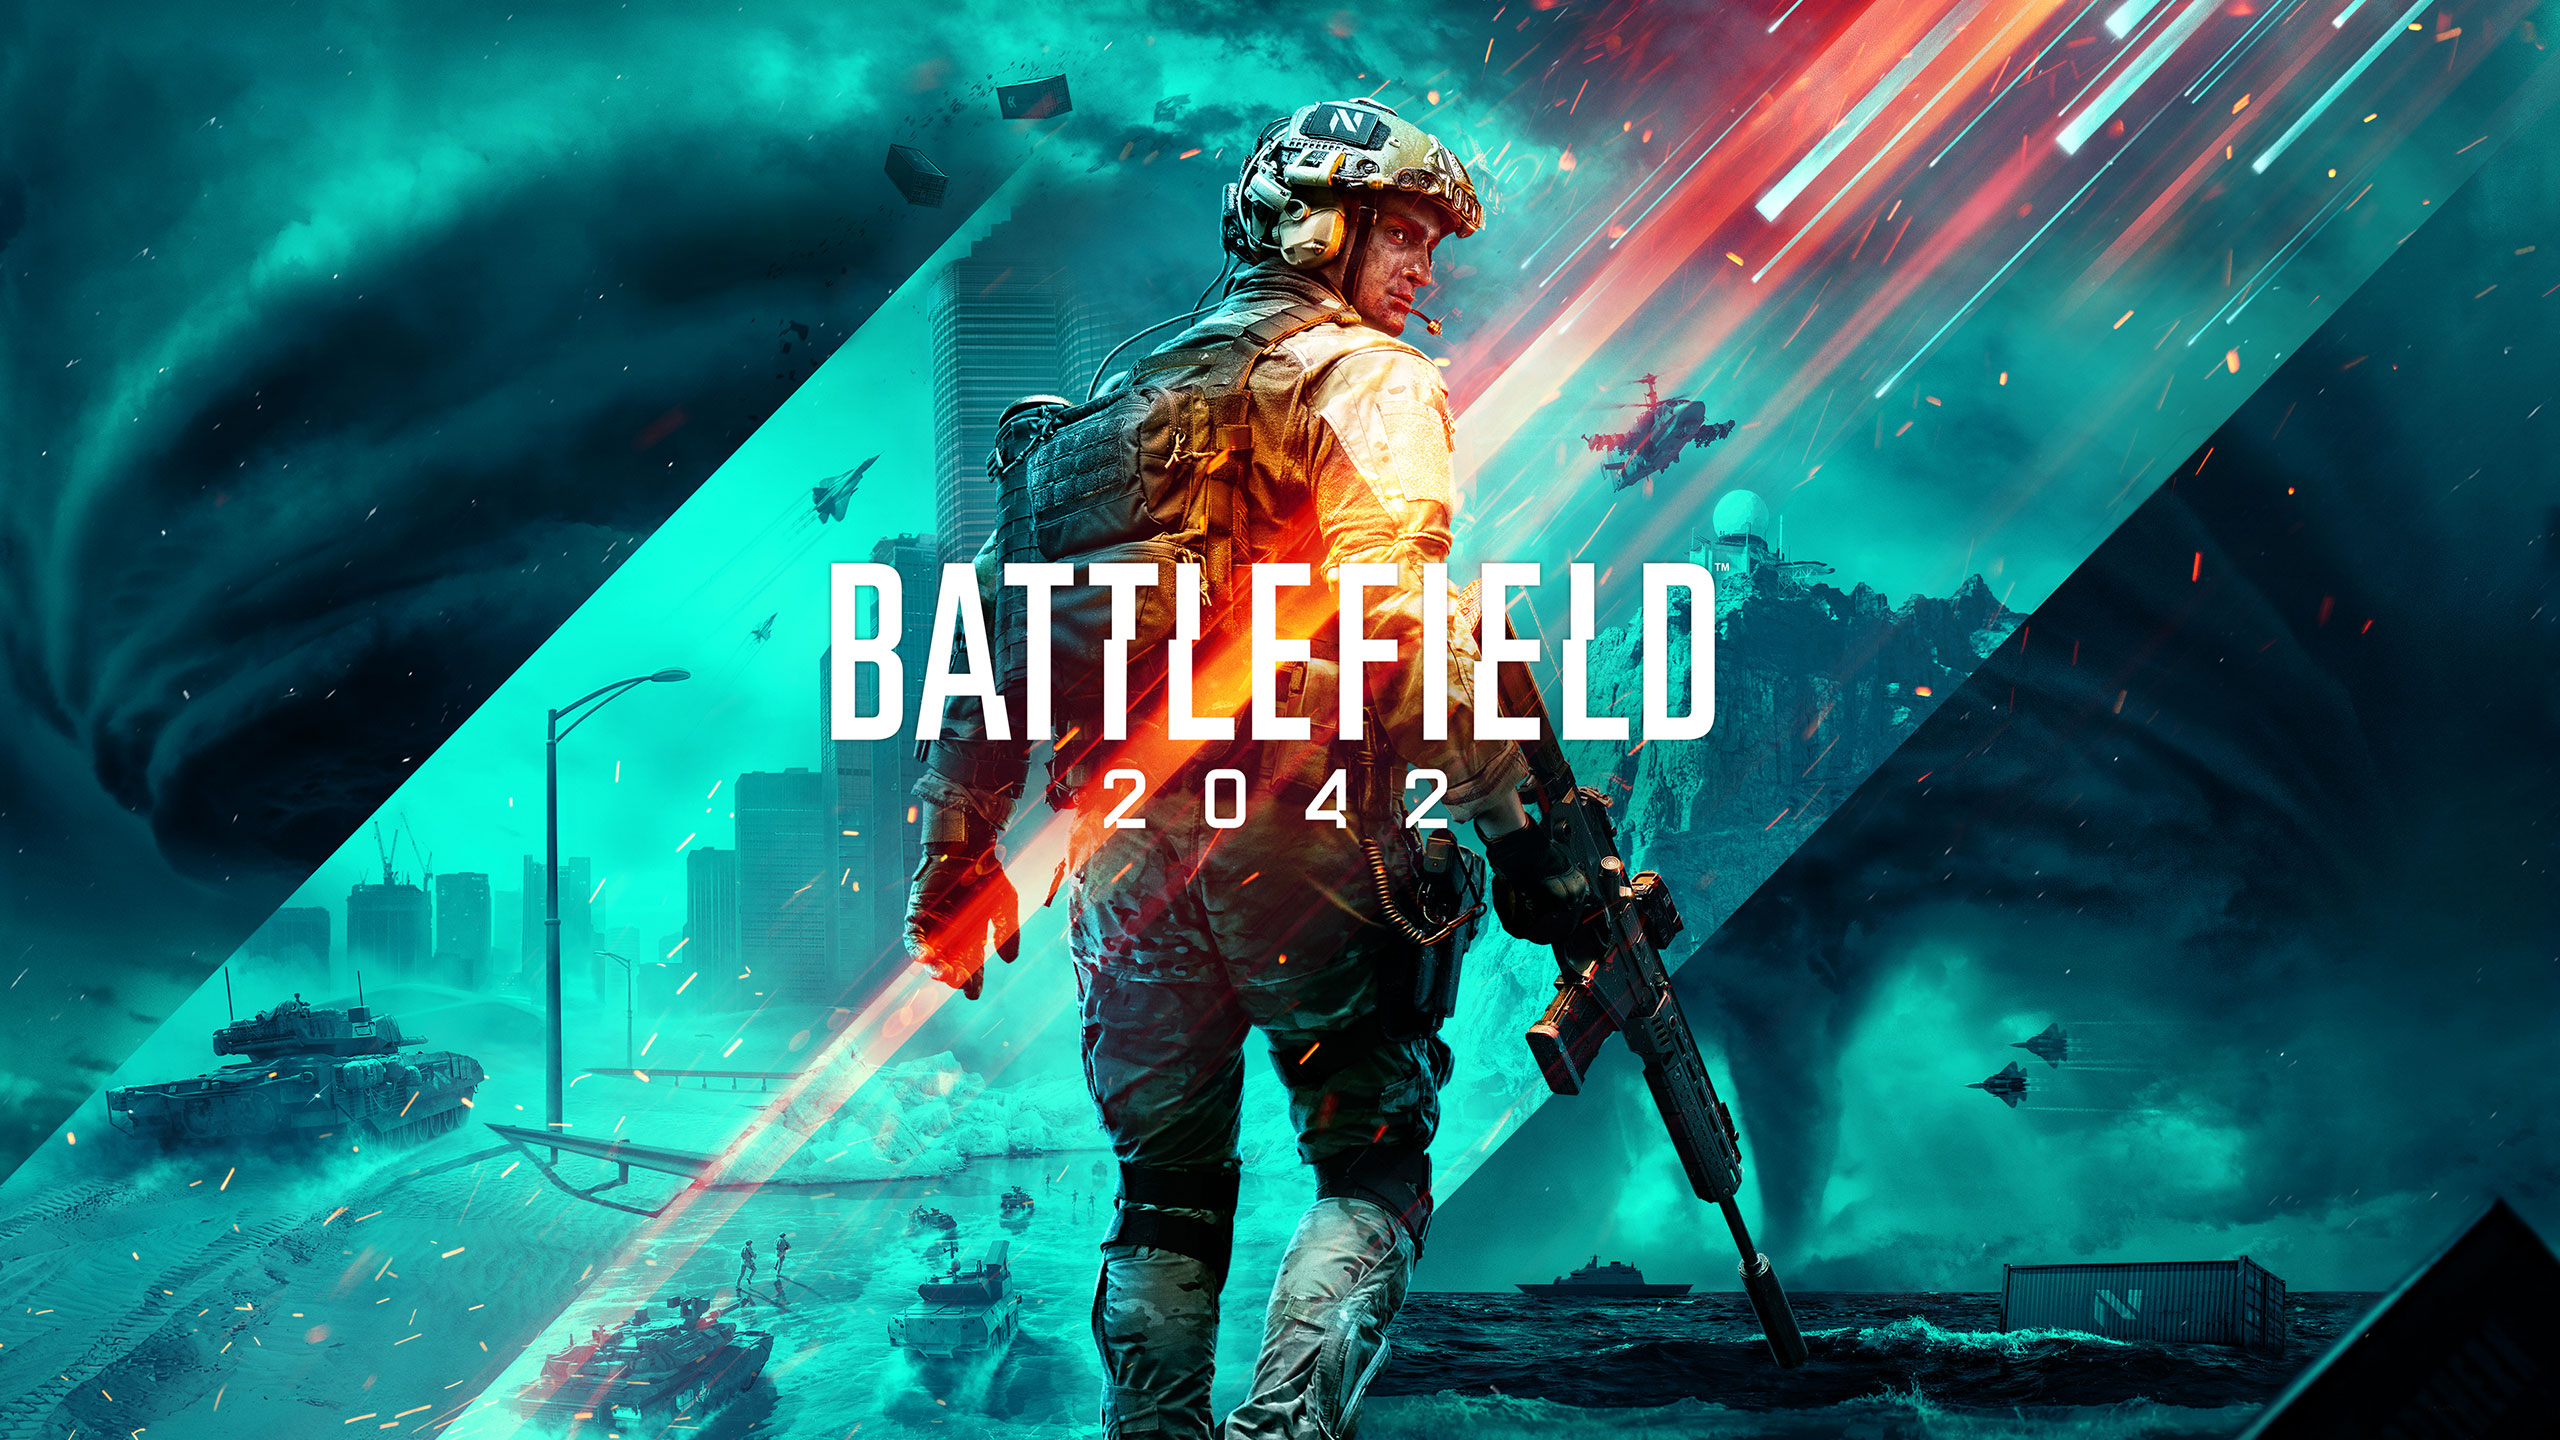 Xbox Details Marketing Partnership With Battlefield 2042